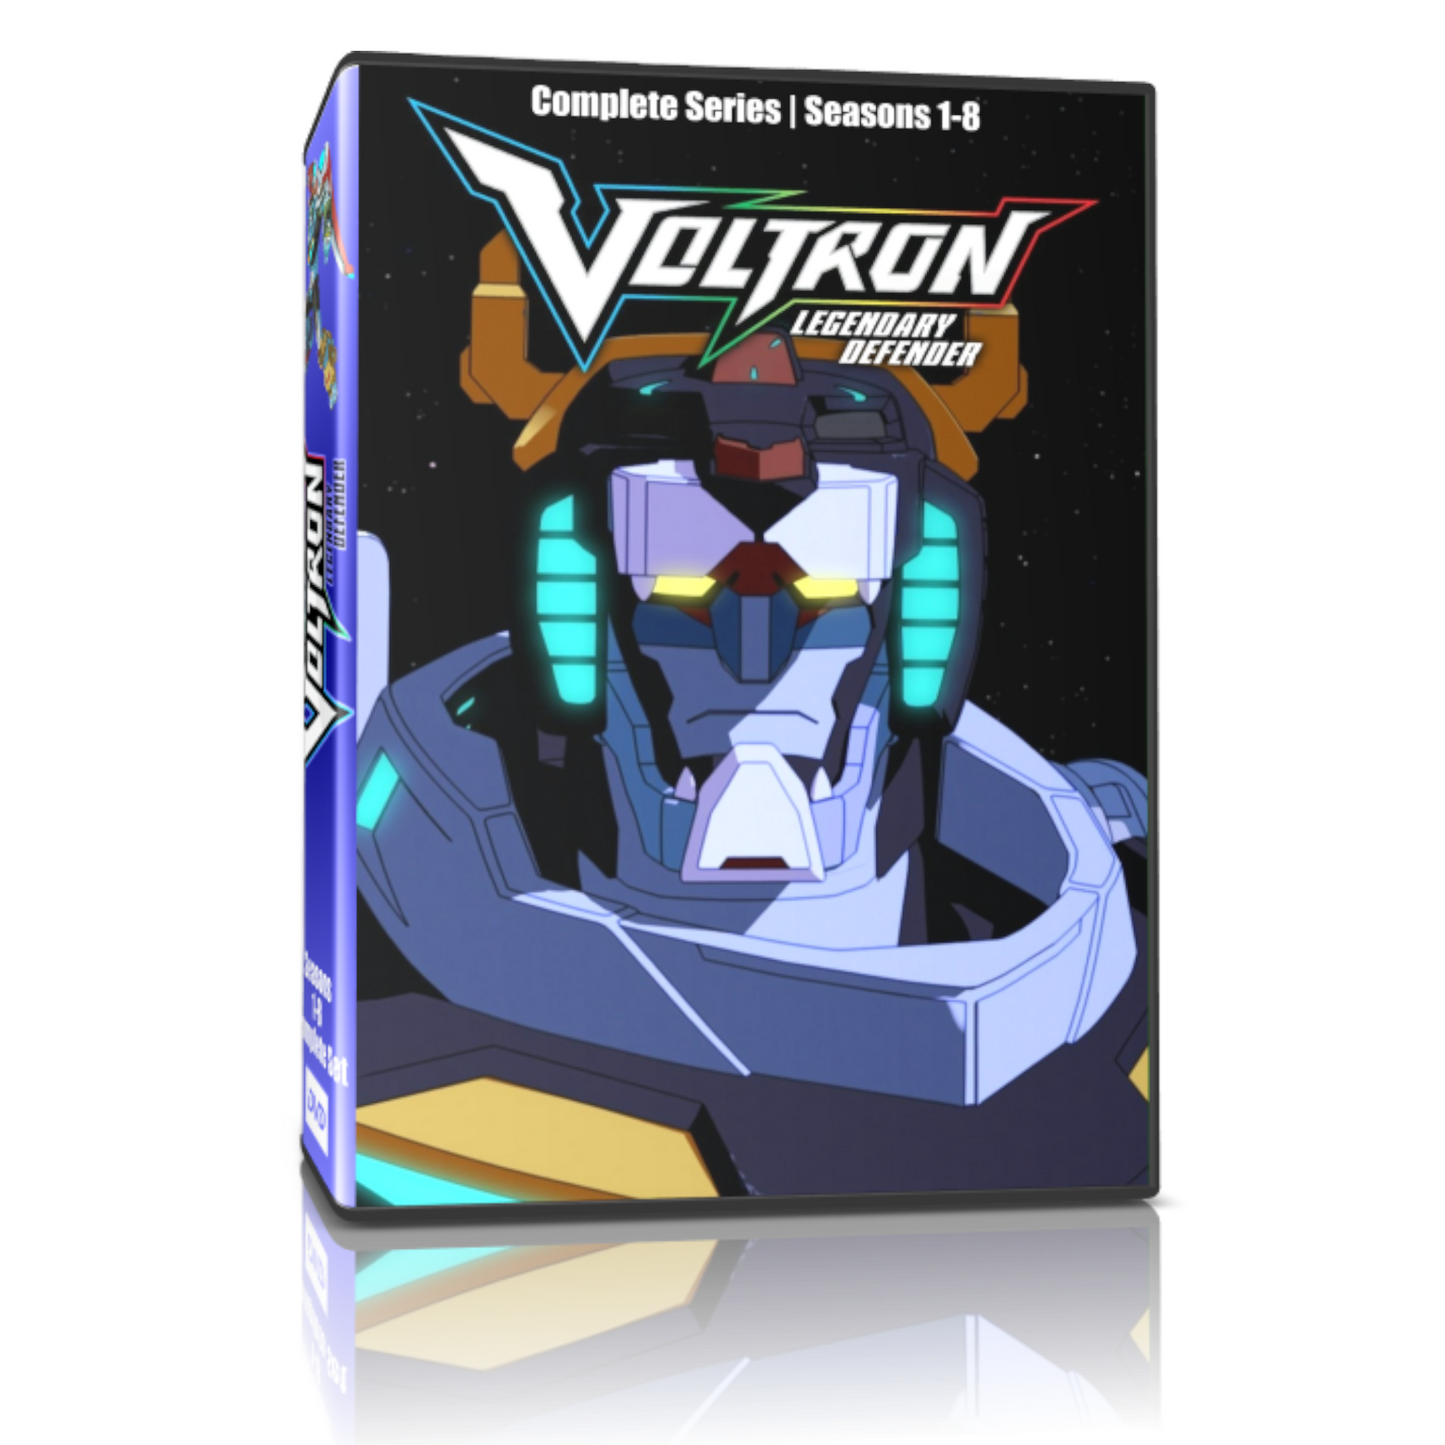 Voltron: Legendary Defender series 2 release date